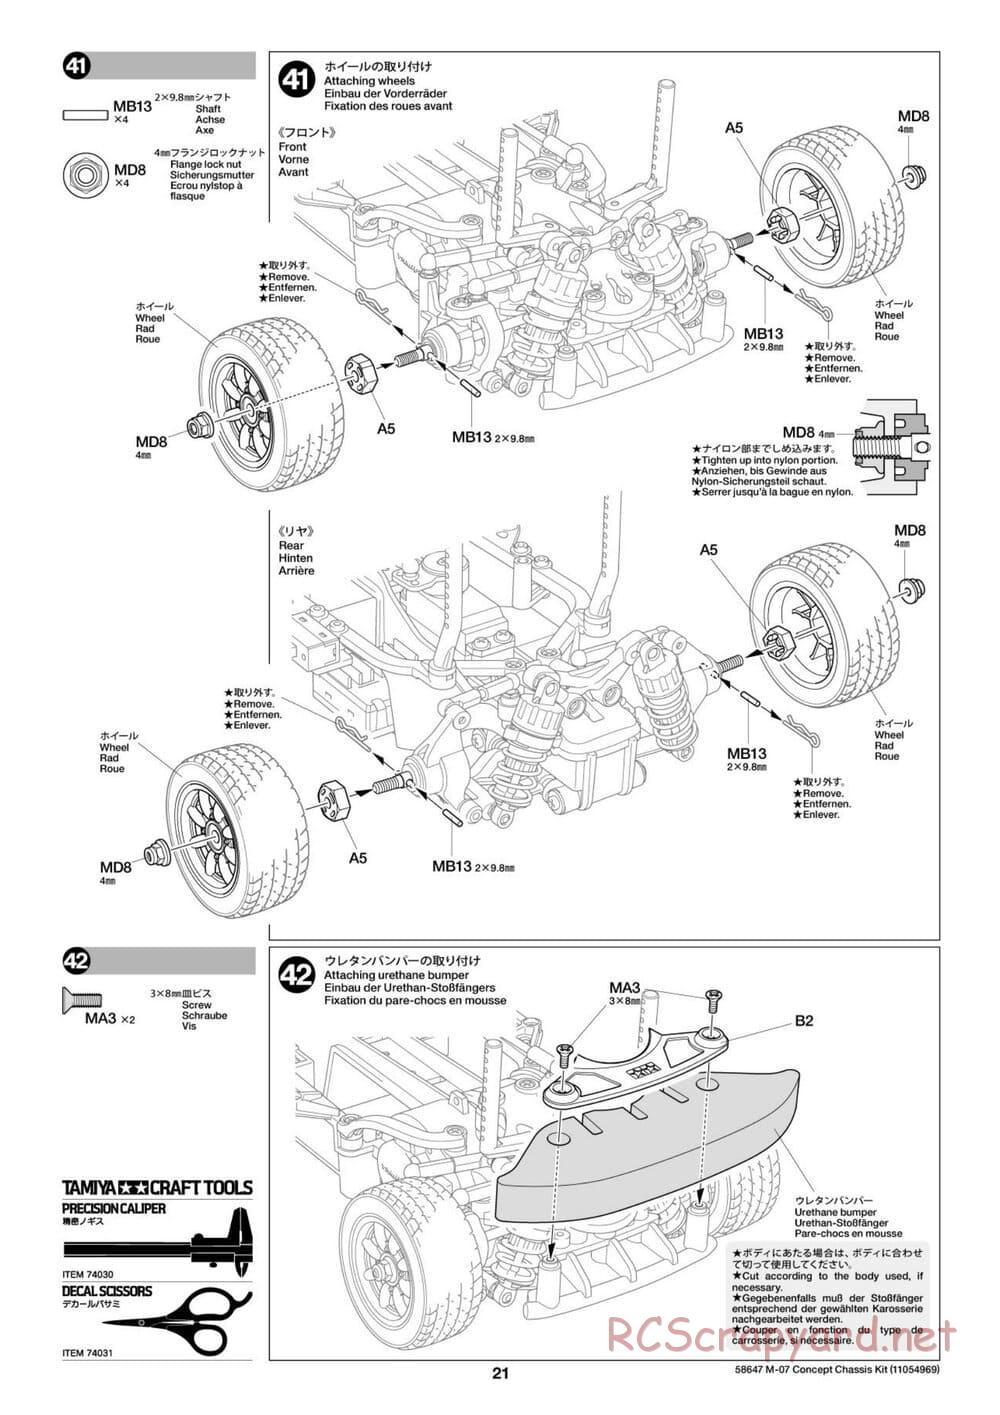 Tamiya - M-07 Concept Chassis - Manual - Page 21